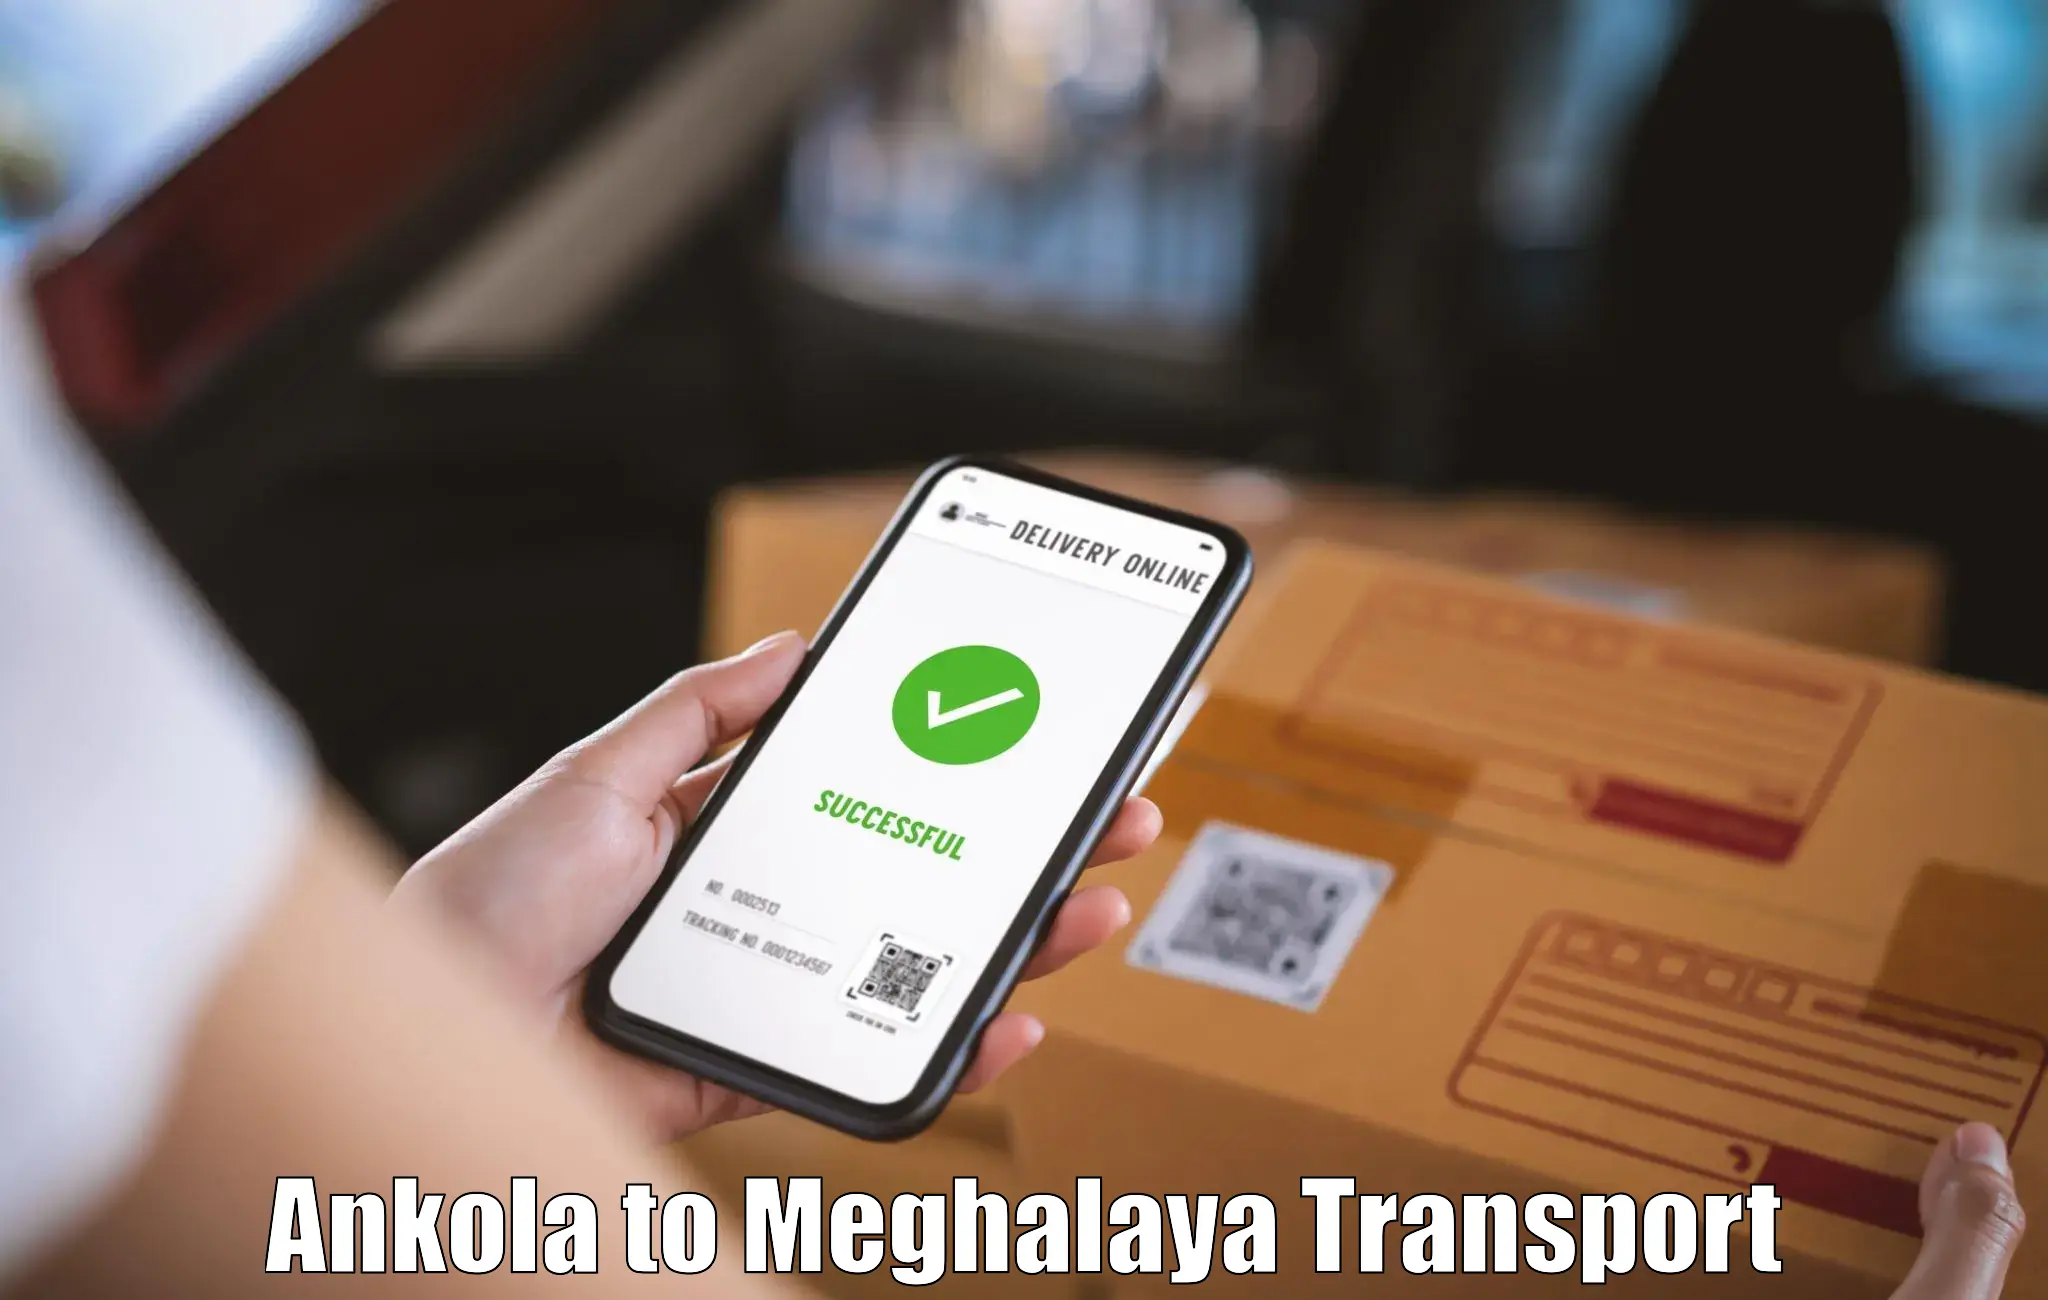 Shipping partner Ankola to Meghalaya